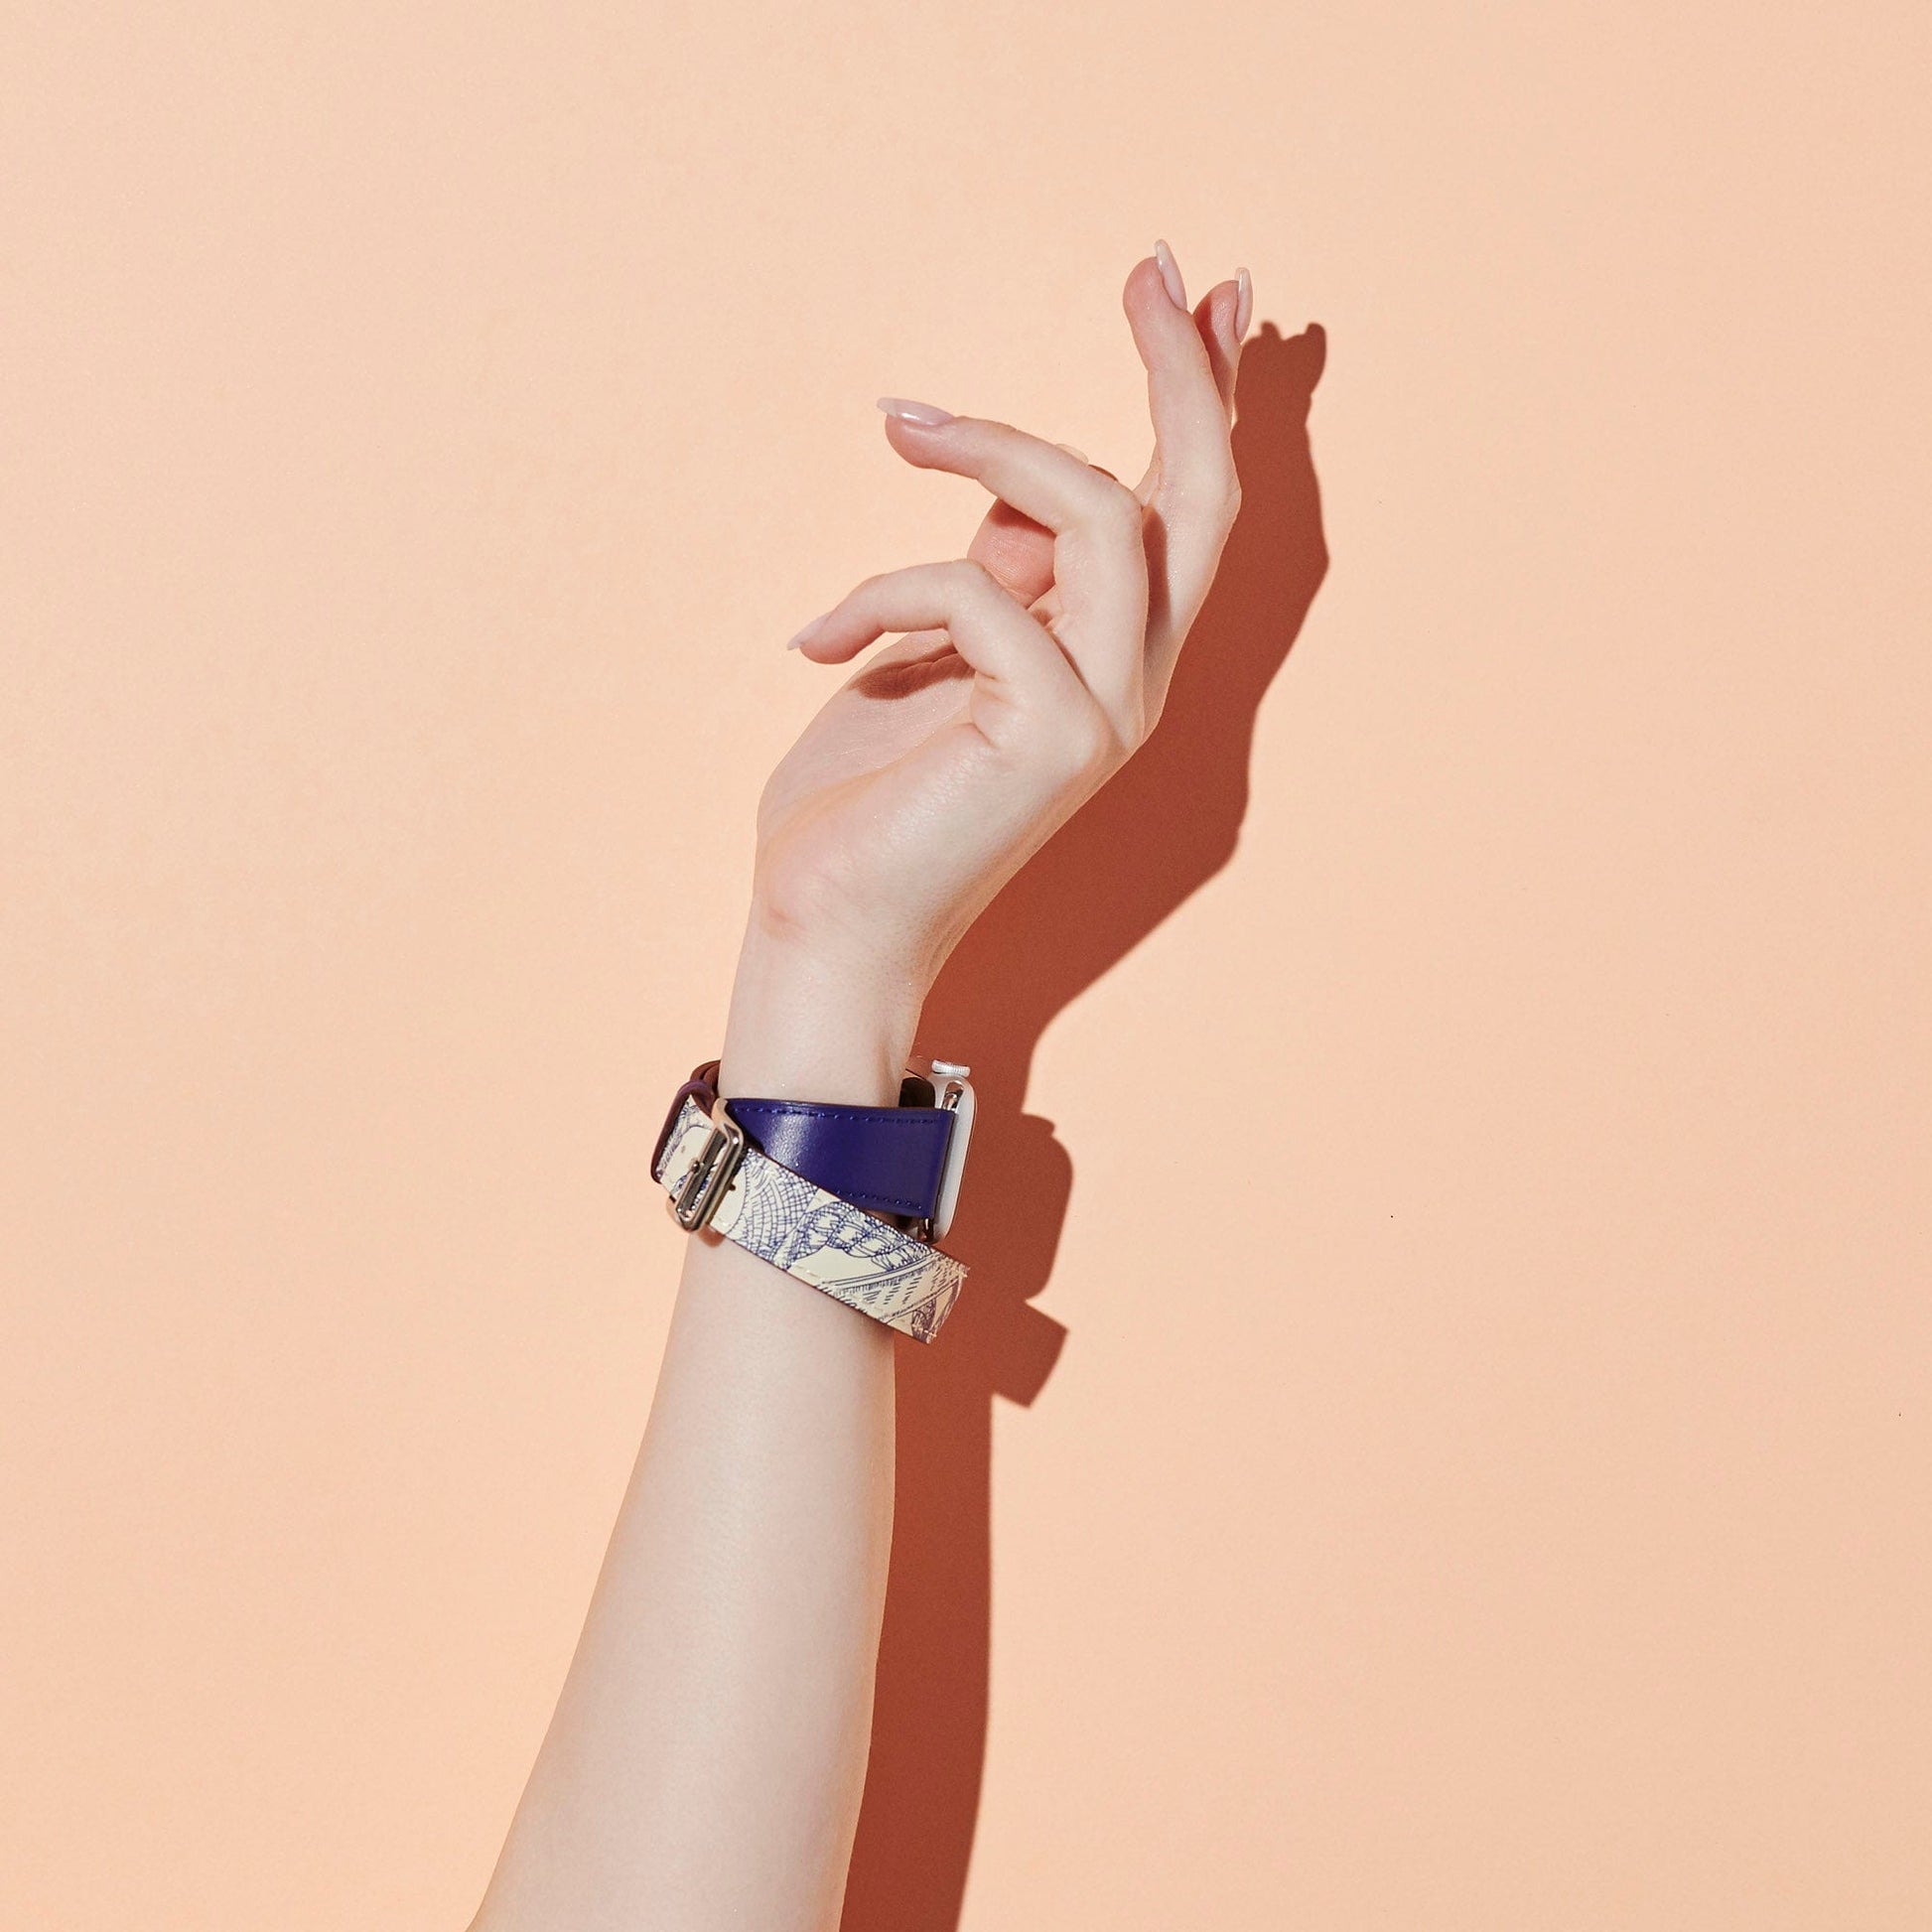 Apple Watch Hermes 40mm Swift Leather Double Tour - Etain/Beton